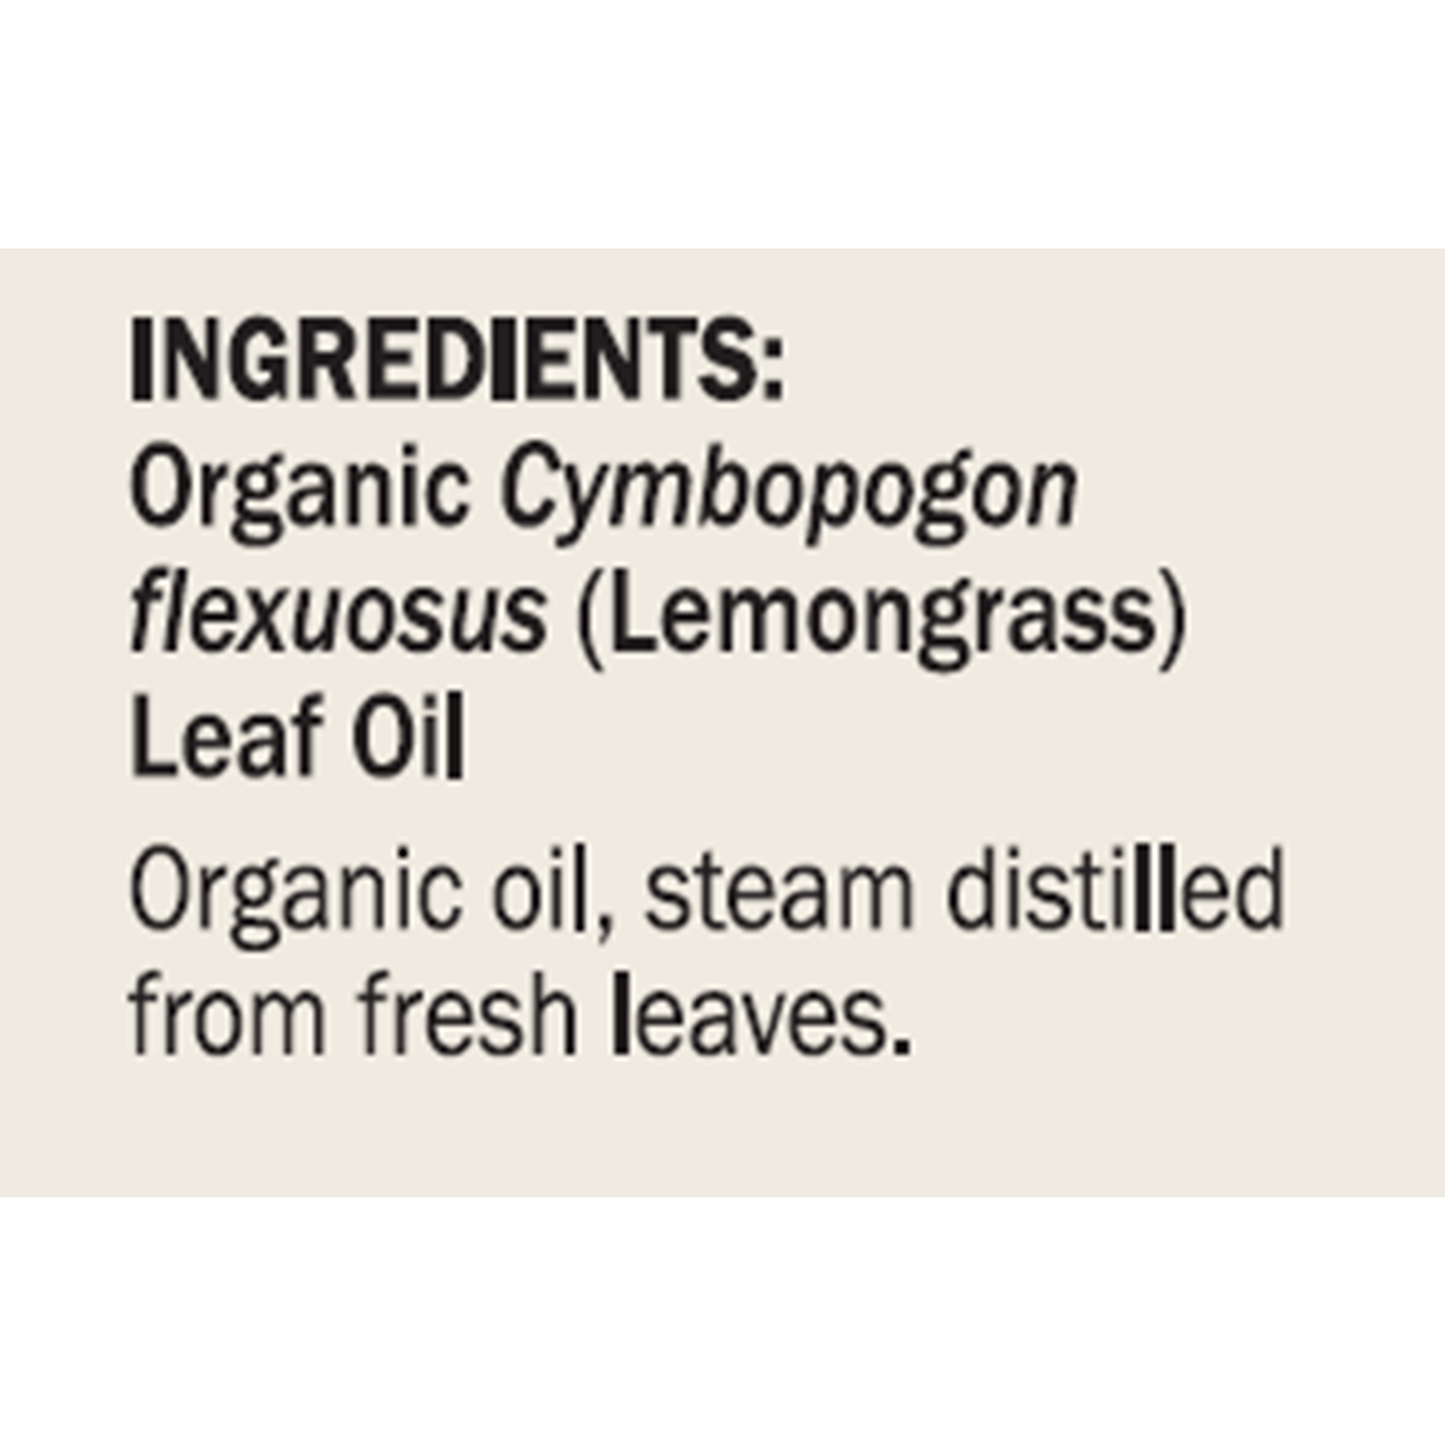 Dr. Mercola Lemongrass Essential Oil Org